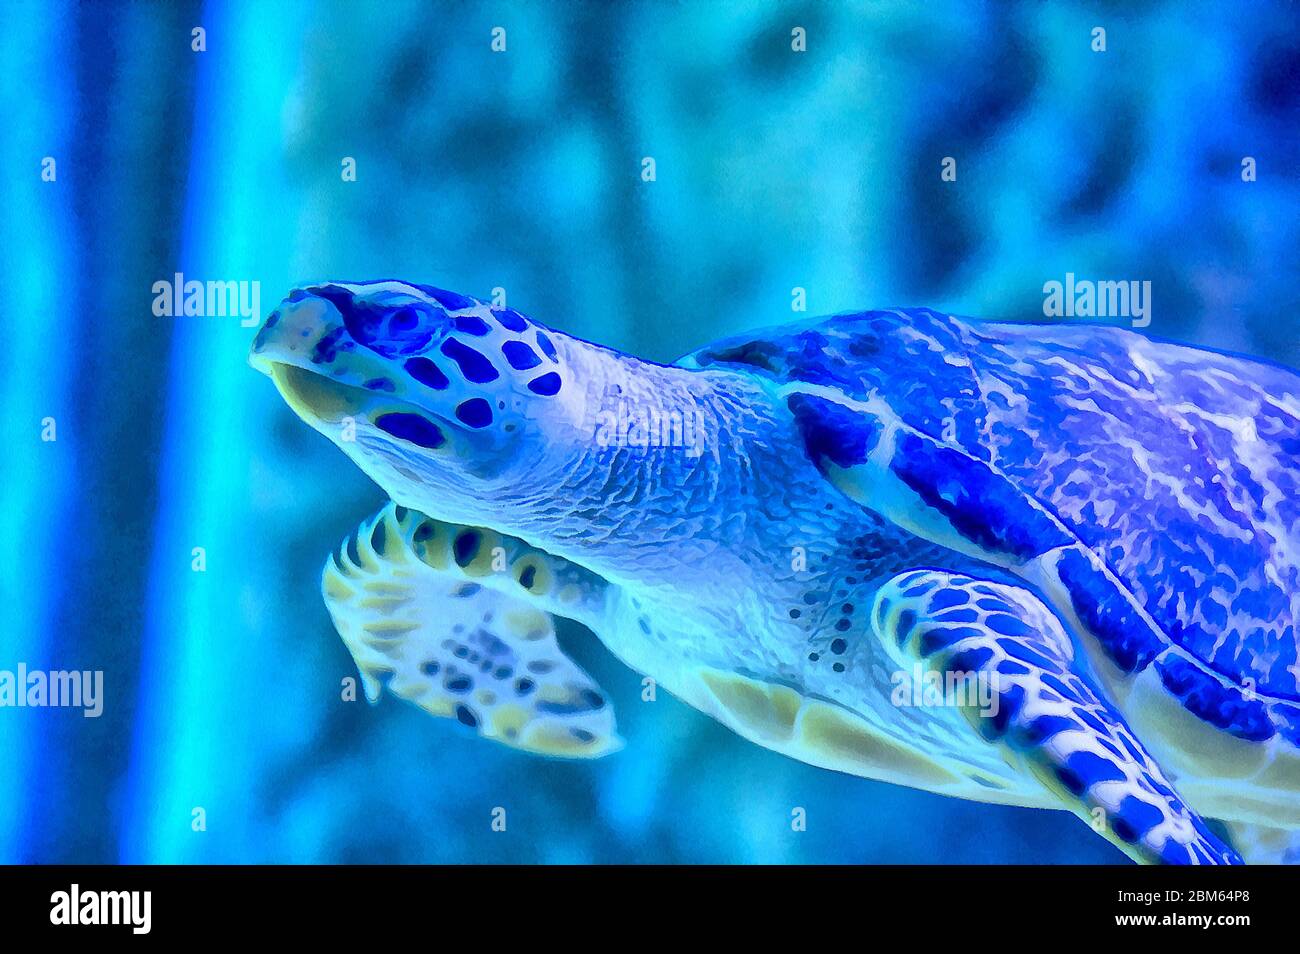 https://c8.alamy.com/comp/2BM64P8/turtle-close-up-view-colorful-painting-looks-like-picture-2BM64P8.jpg